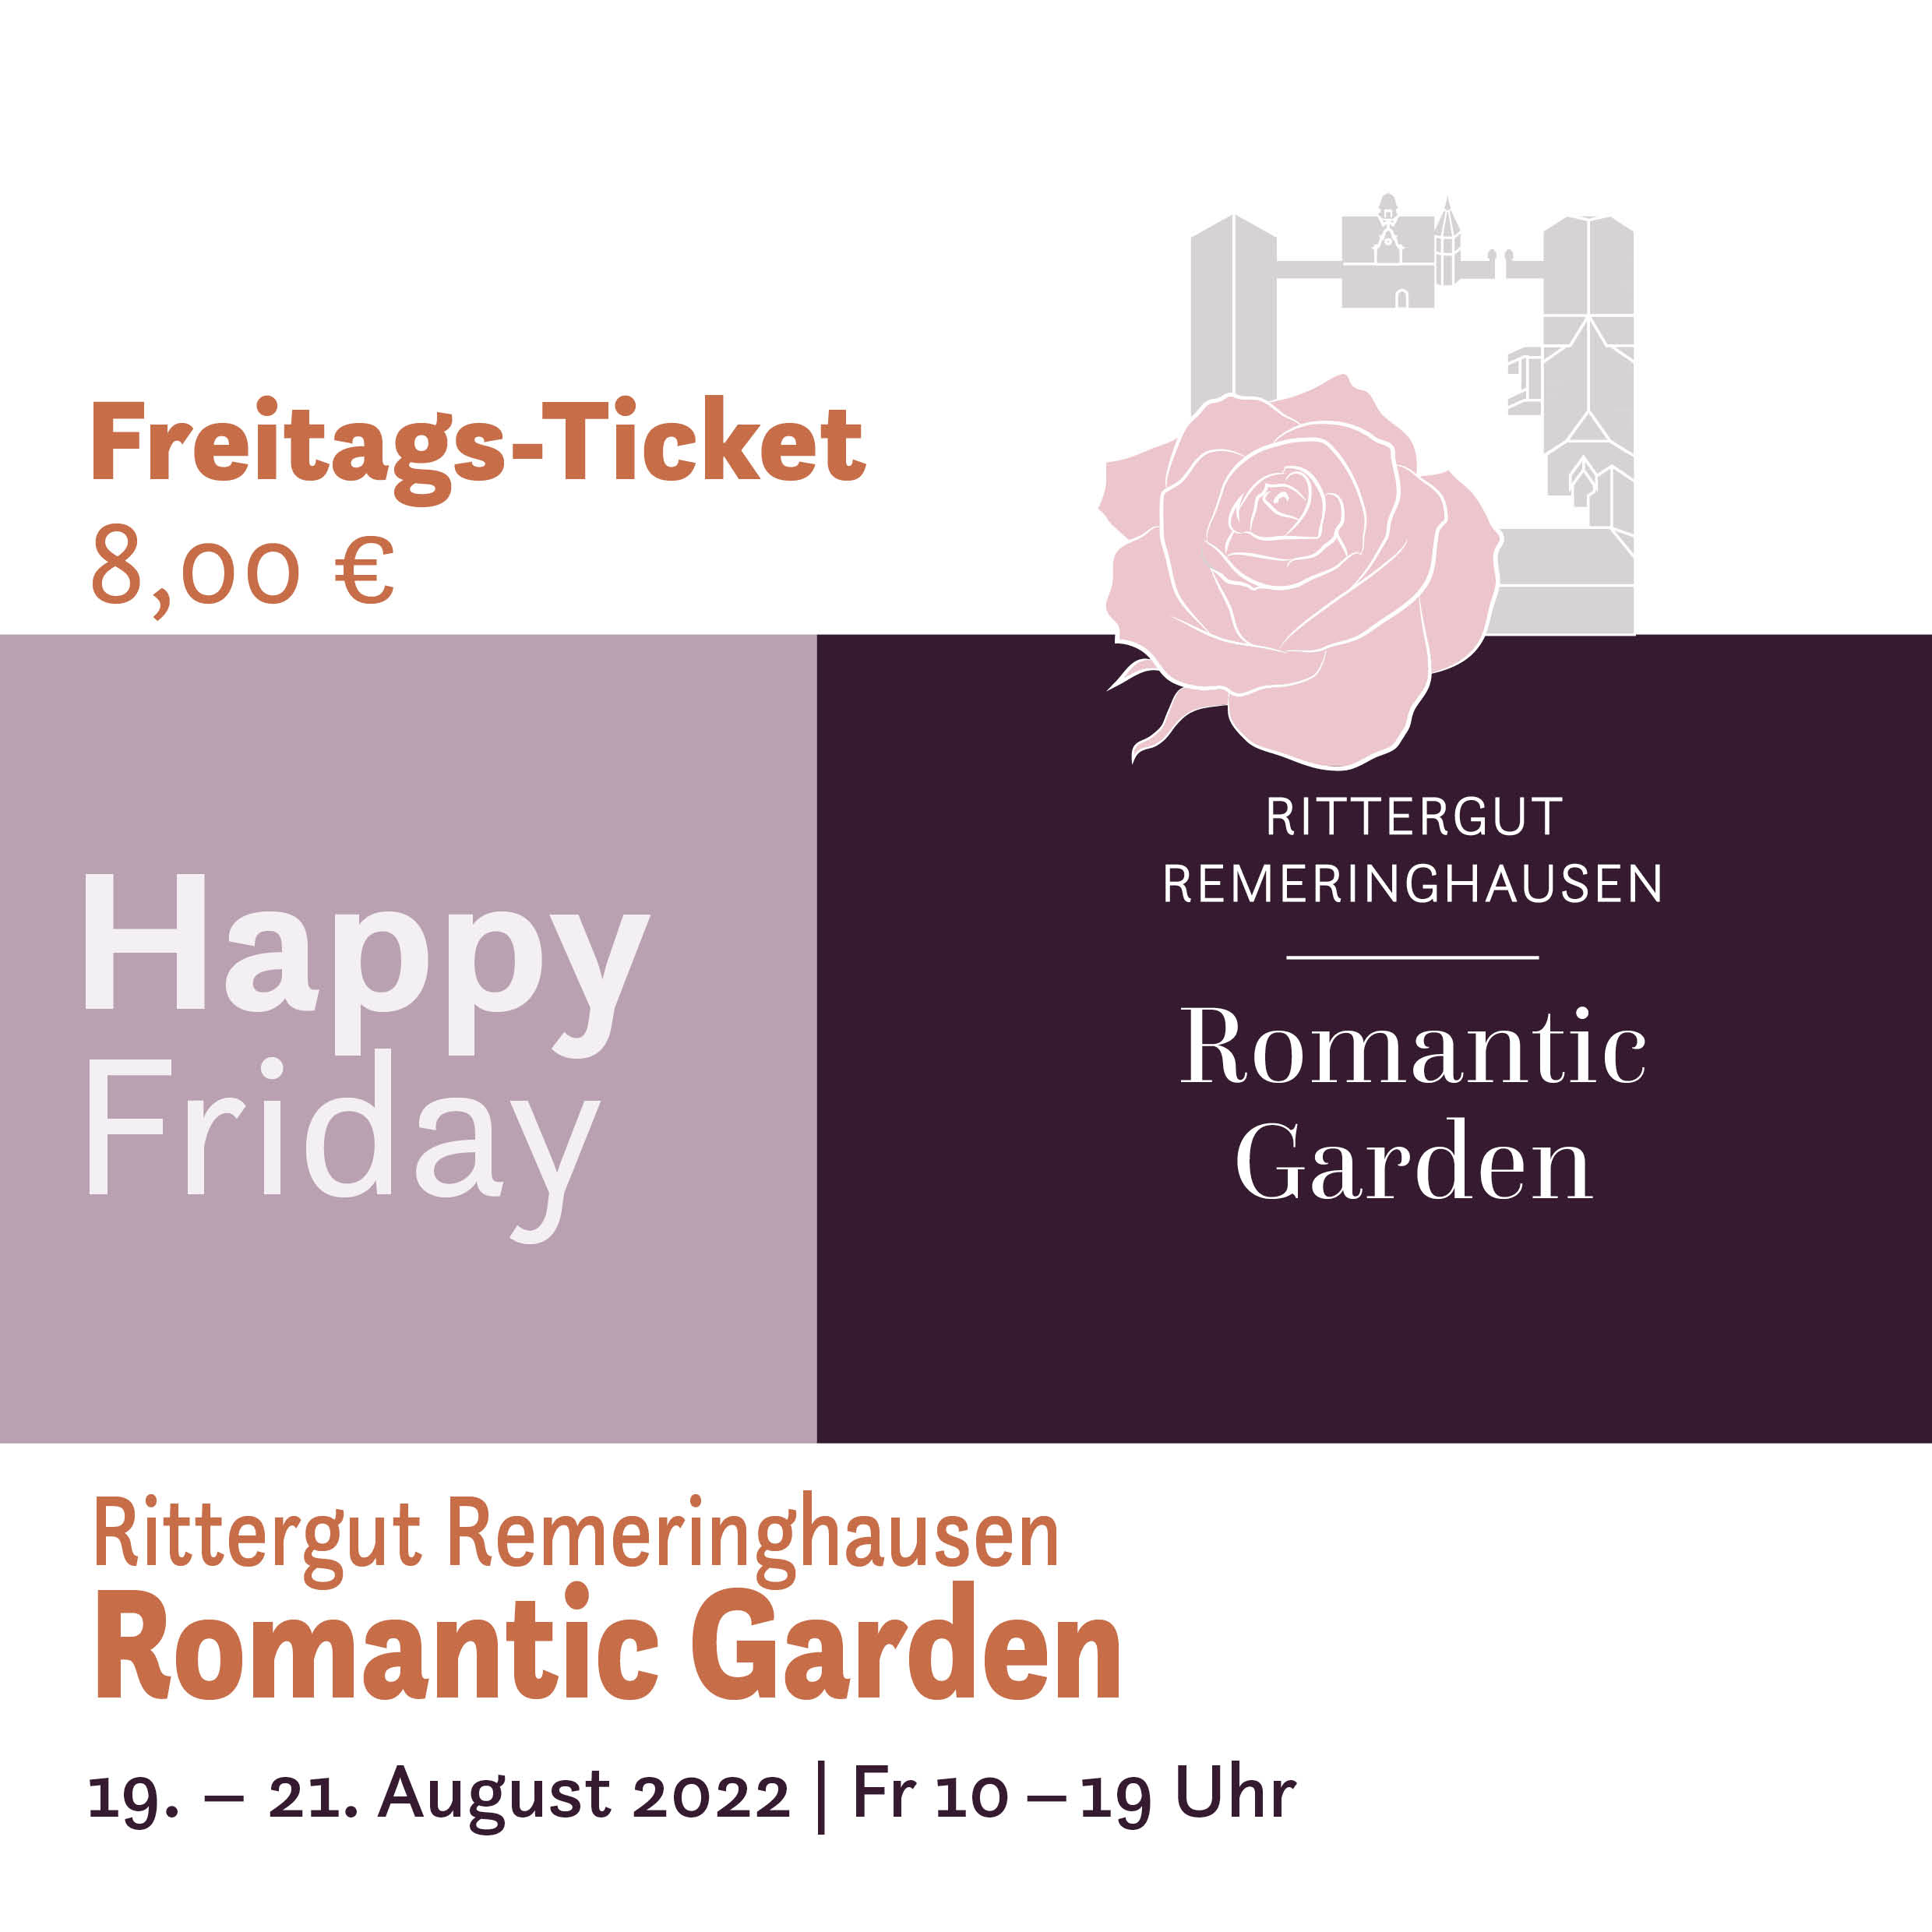 Romantic Garden 2022 - Happy Friday Ticket 